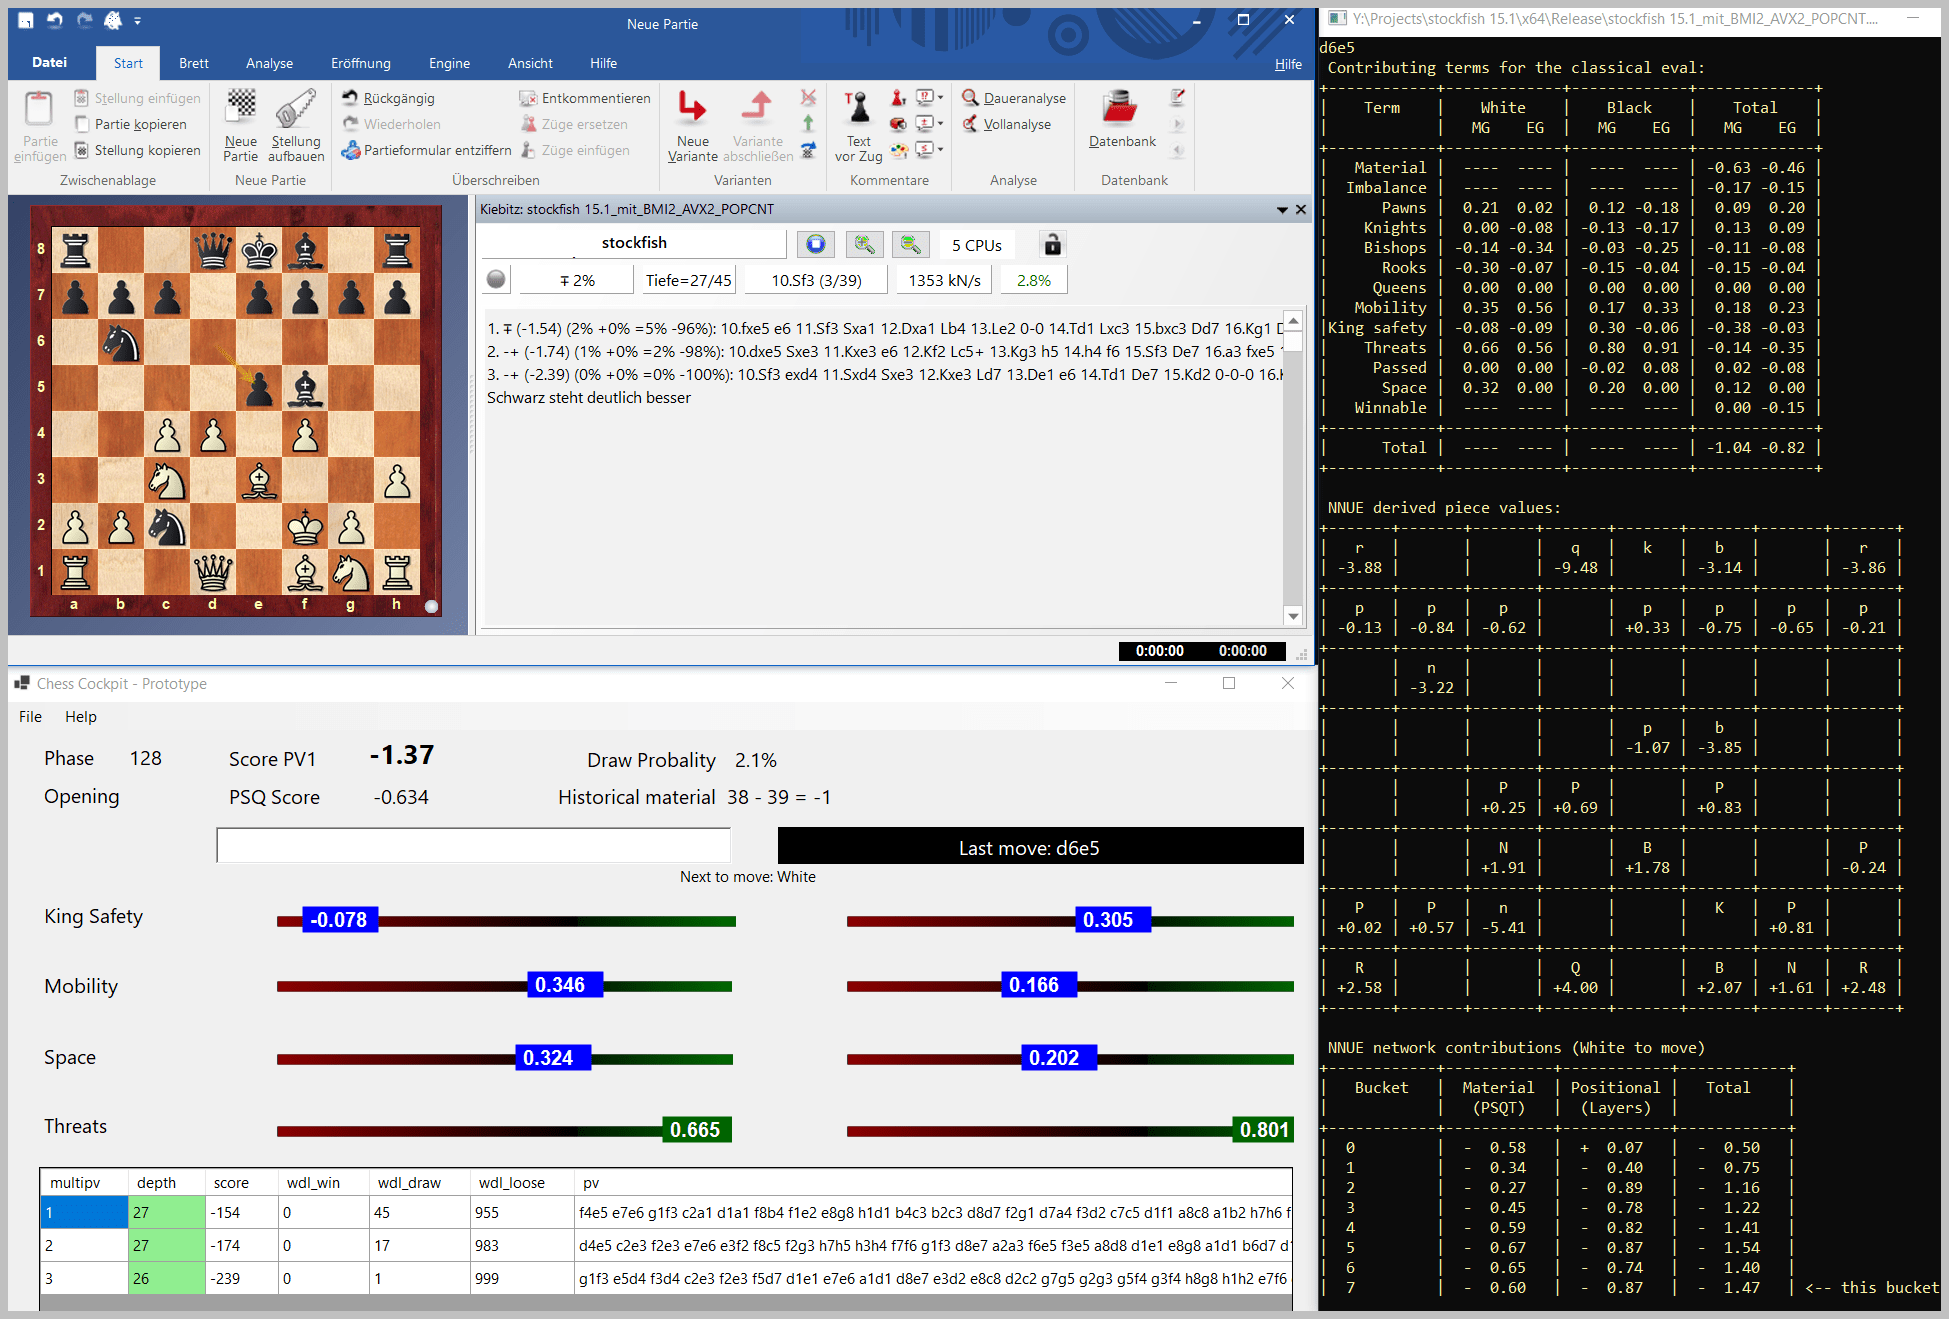 Stockfish 15 With No Center Pawns vs Chess.com Maximum Level 25 #chess